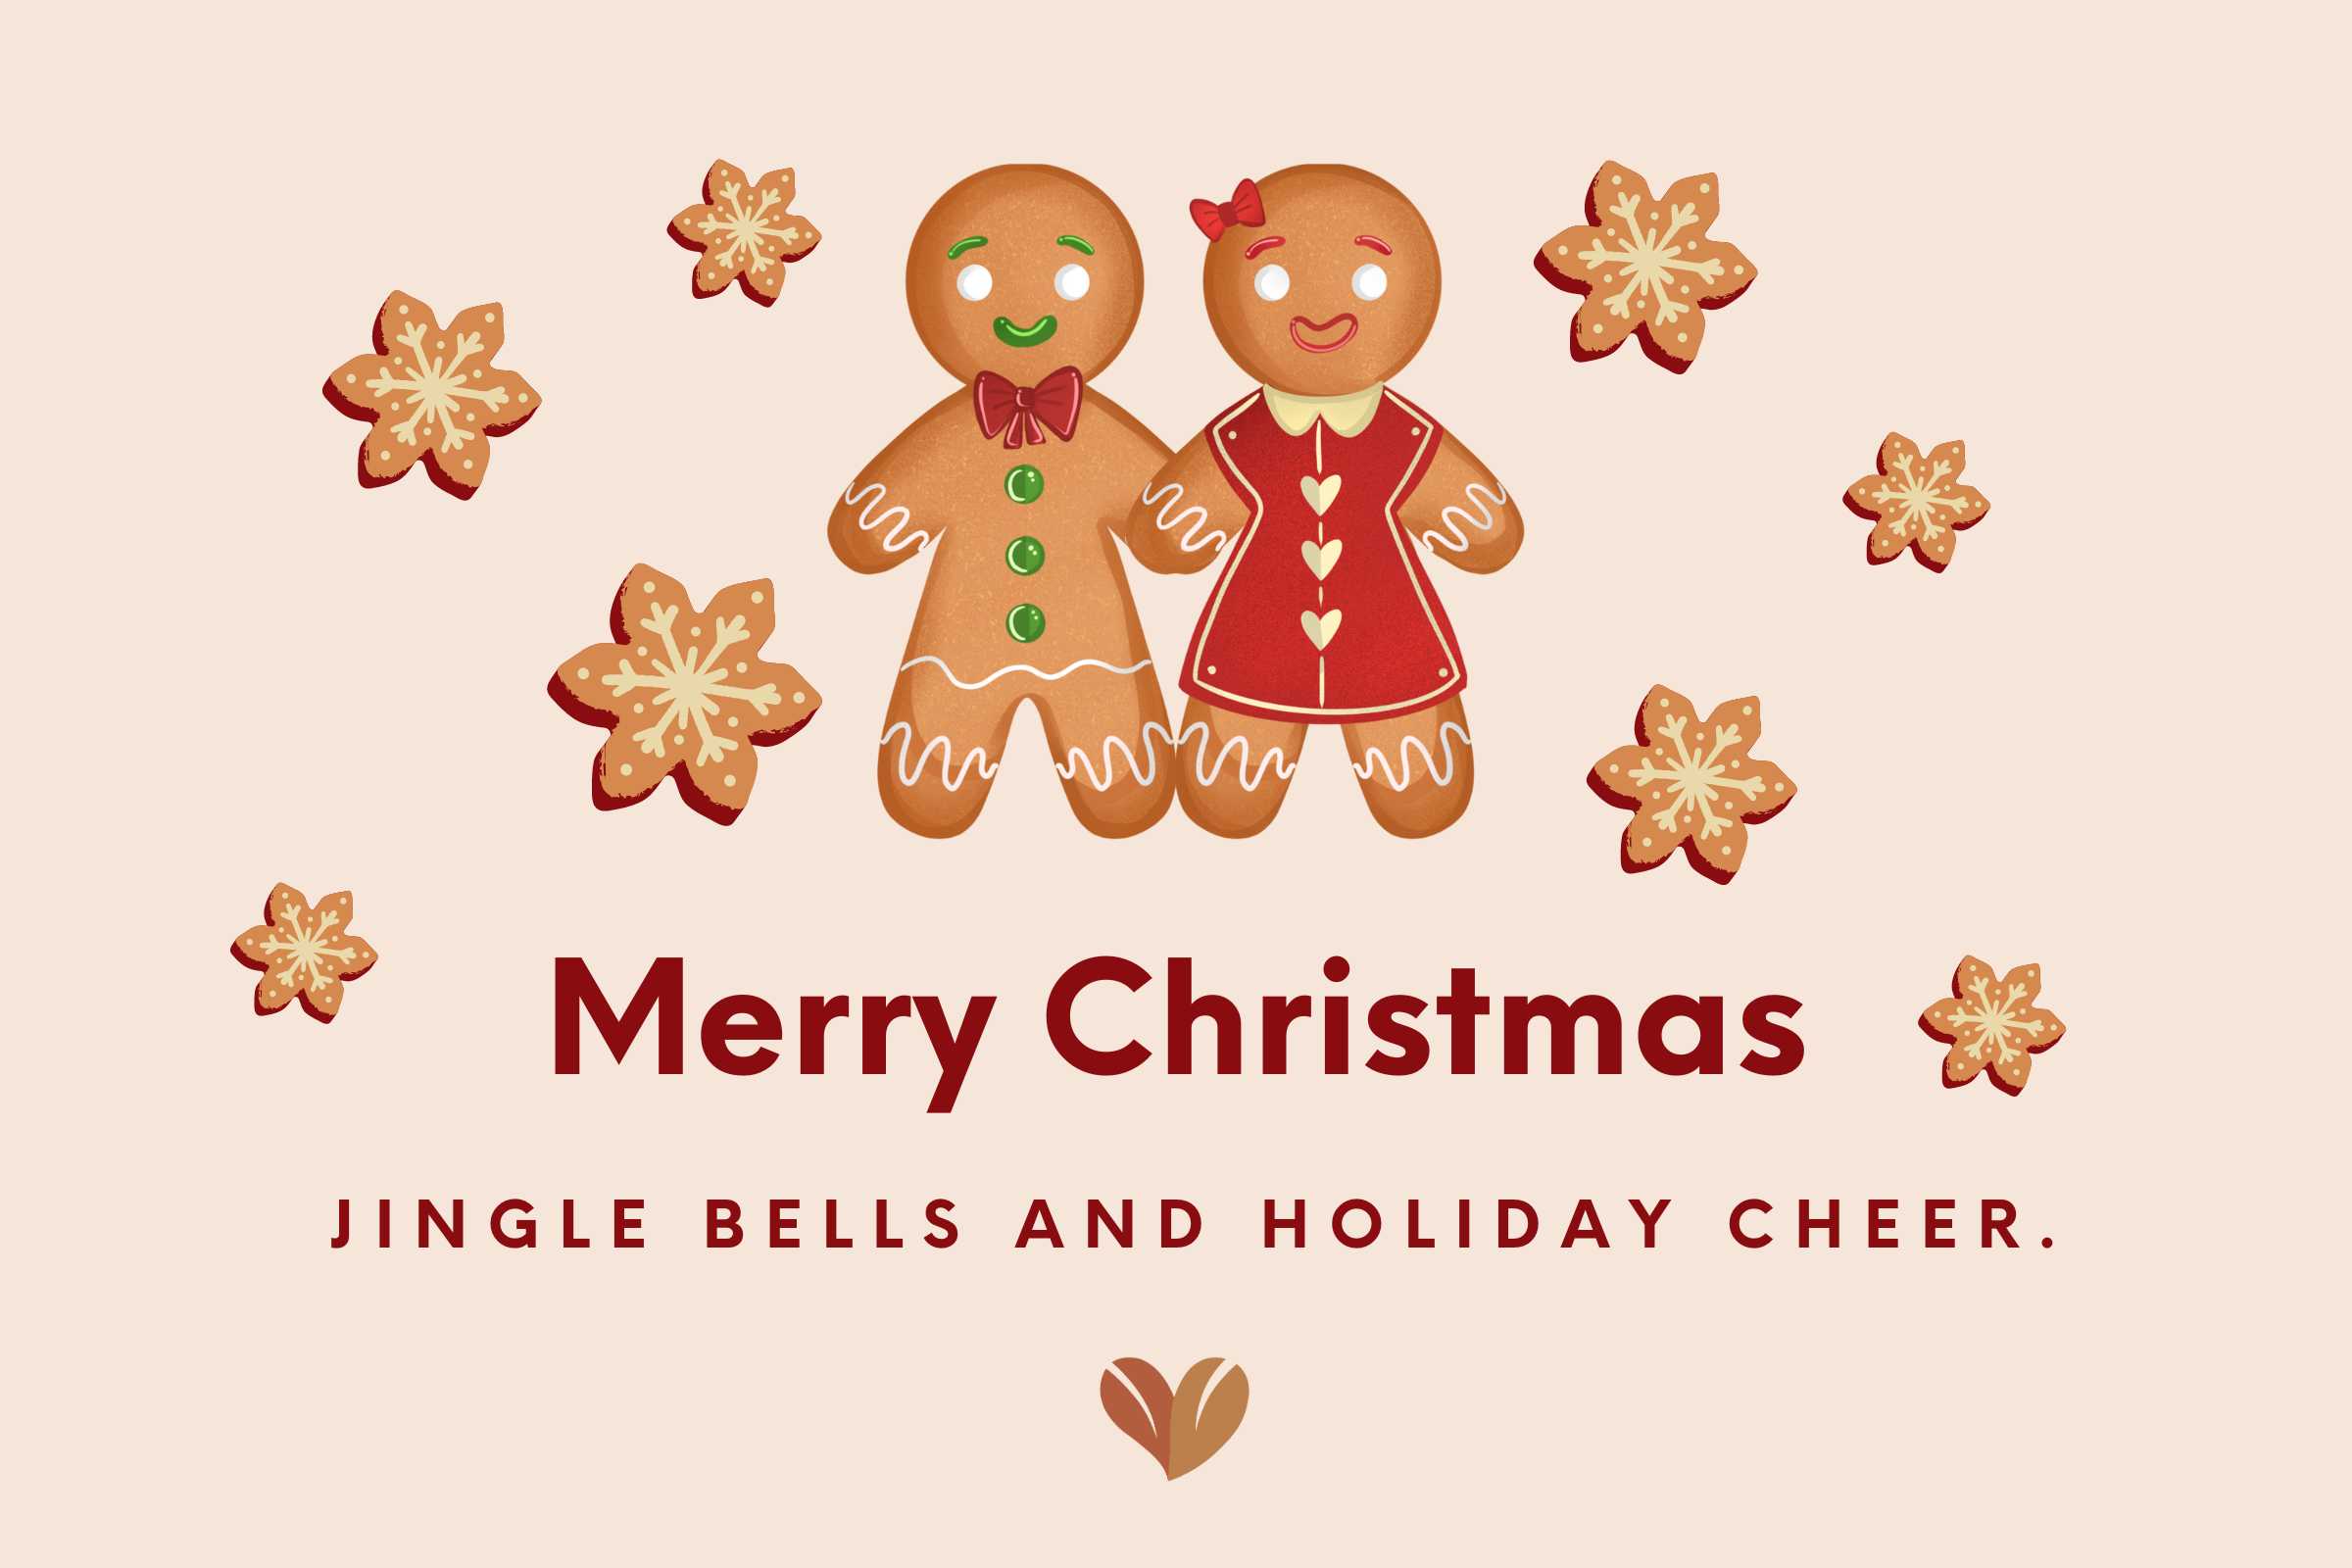 Short Christmas sayings - Jingle bells and holiday cheers